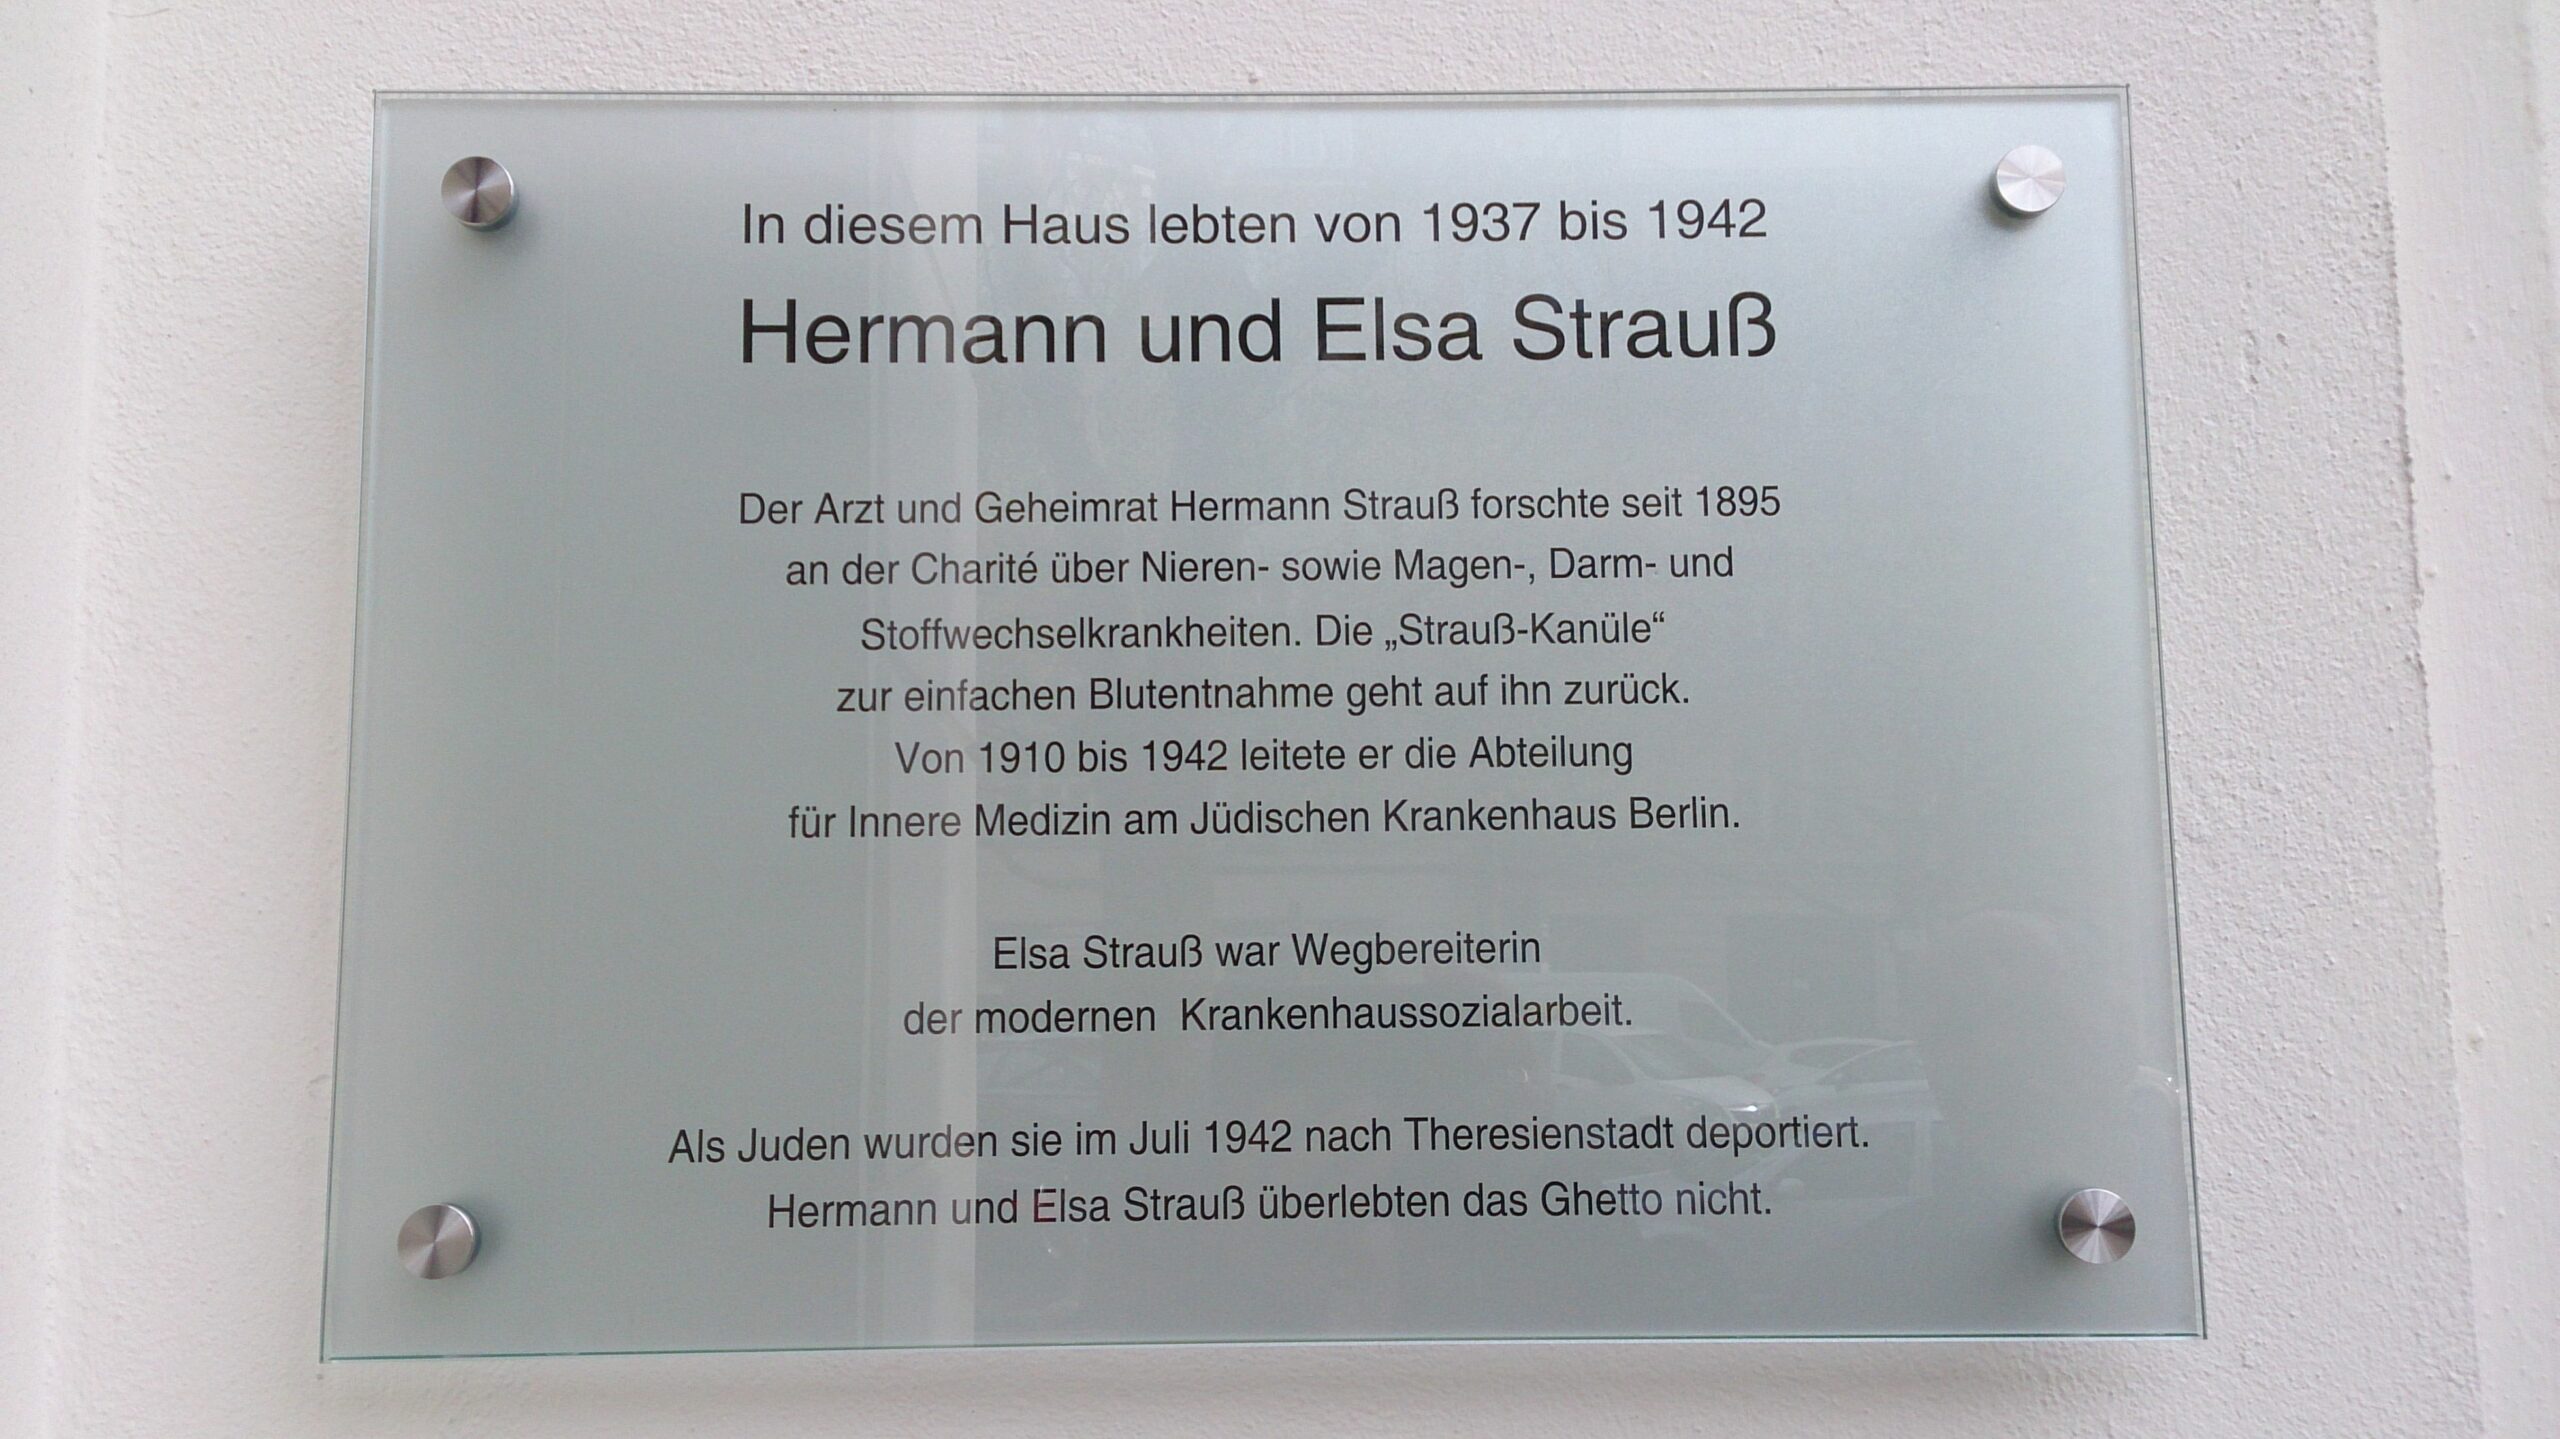 Memorial plaque for Hermann and Elsa Strauss, Kurfürstendamm 184, Berlin, Photo H Je